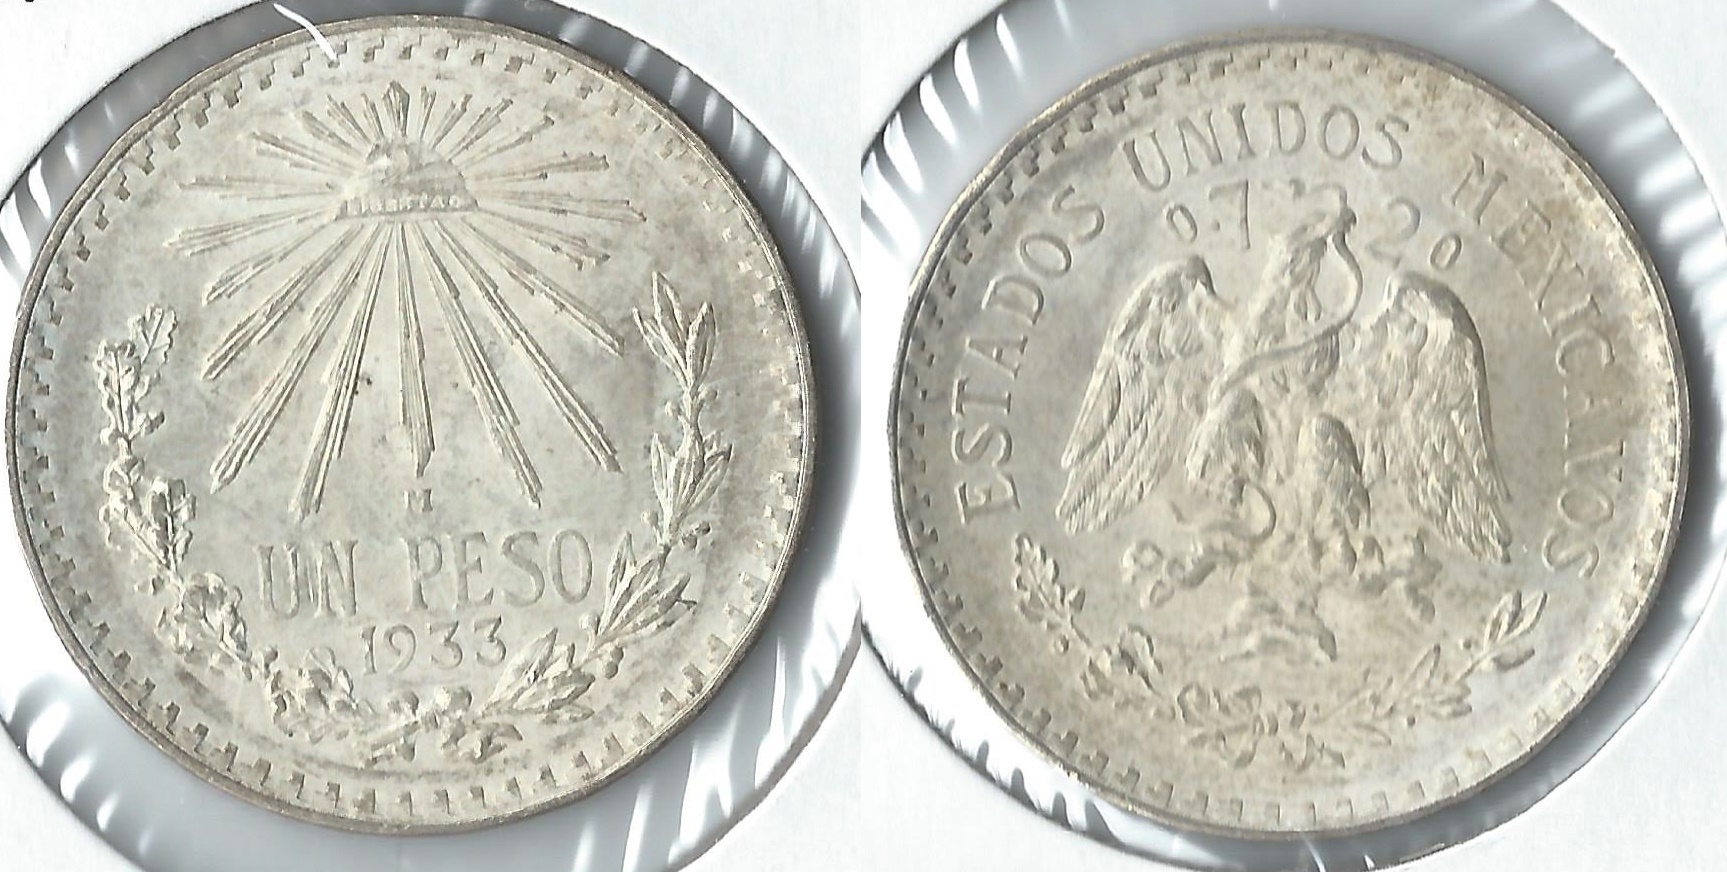 1933 mexico 1 peso.jpg